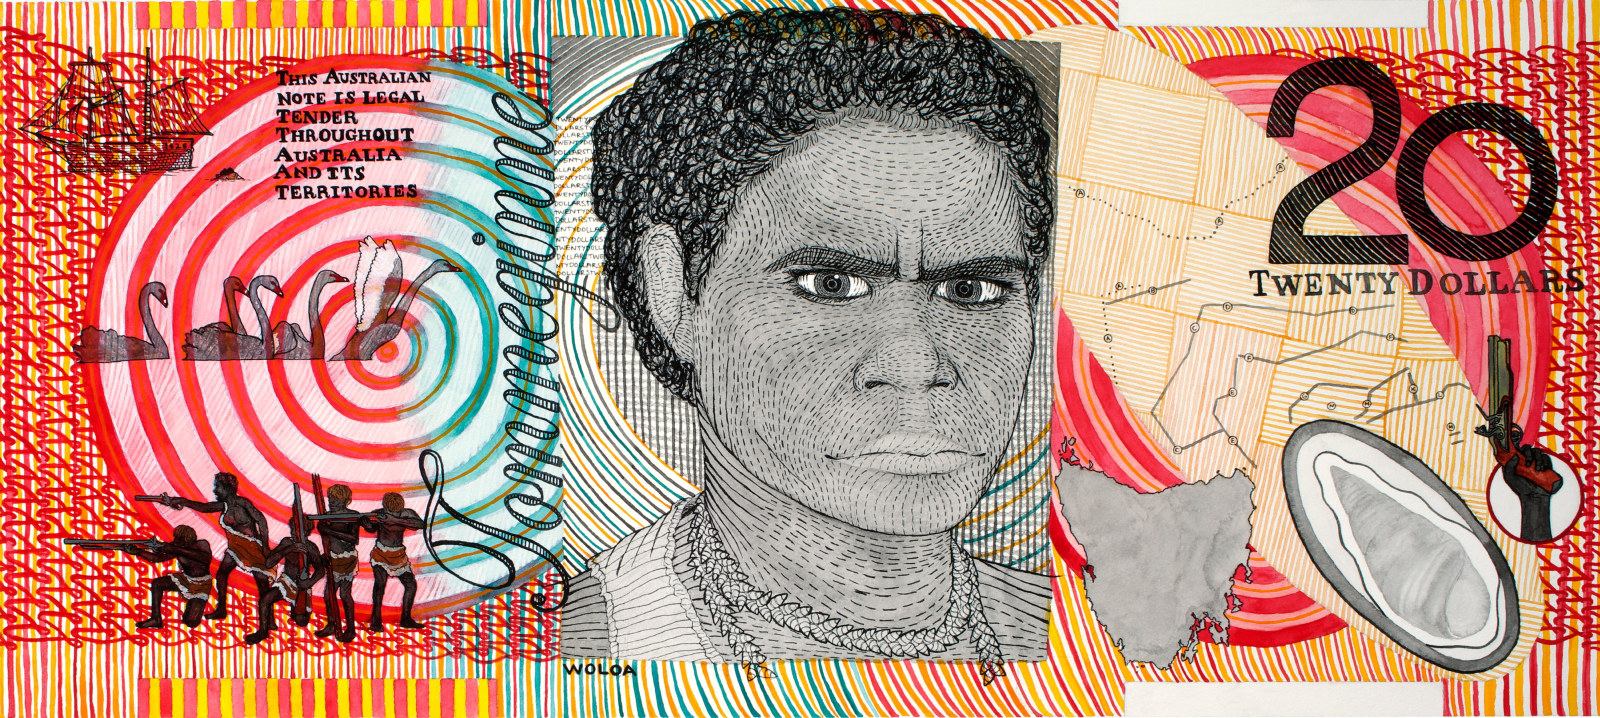 Twenty Dollar Note - Woloa Commemorative, 2010